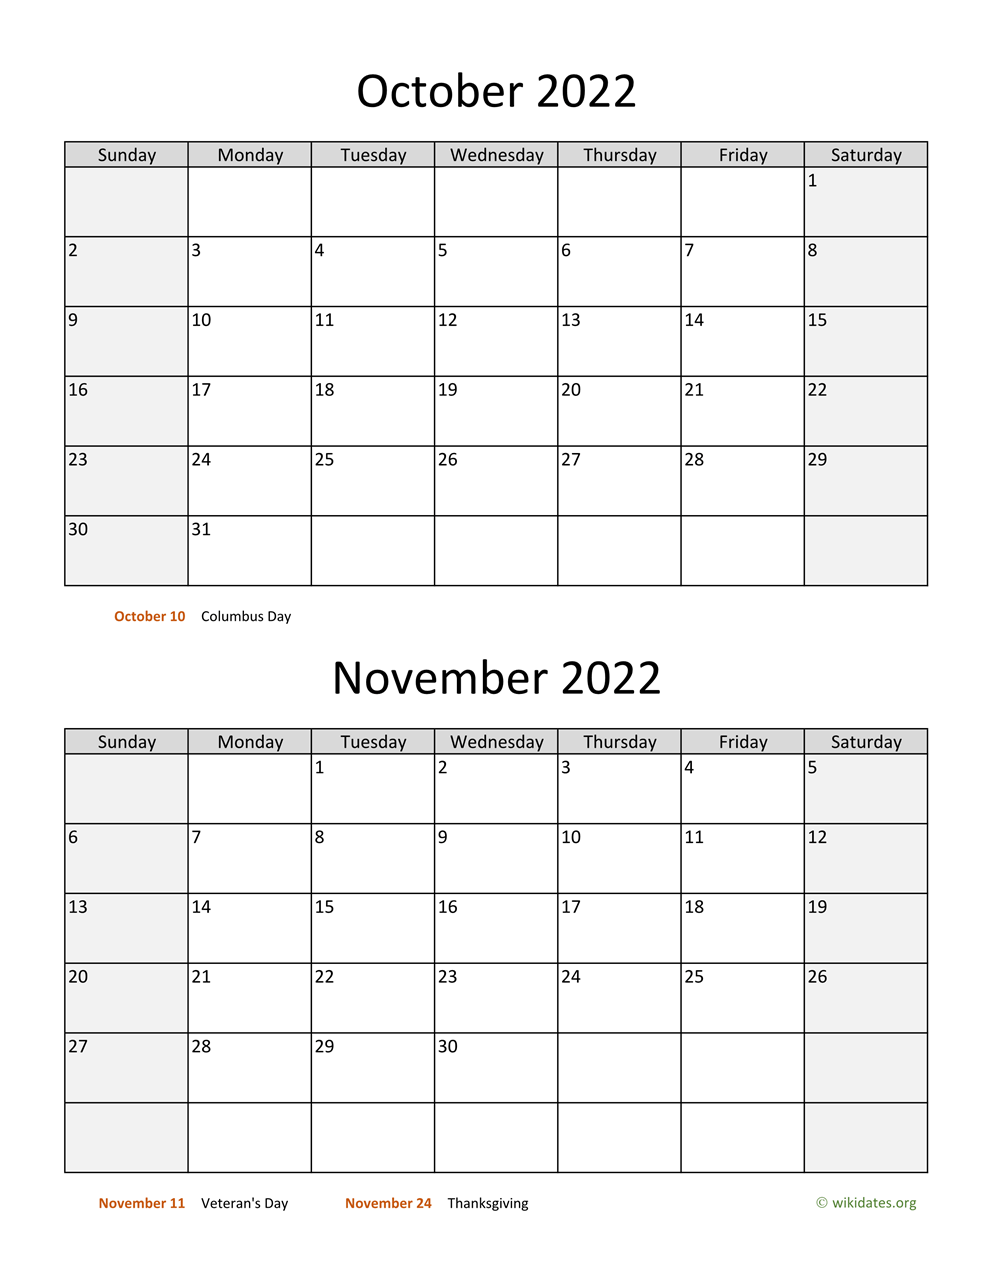 Oct And Nov 2022 Calendar October And November 2022 Calendar | Wikidates.org